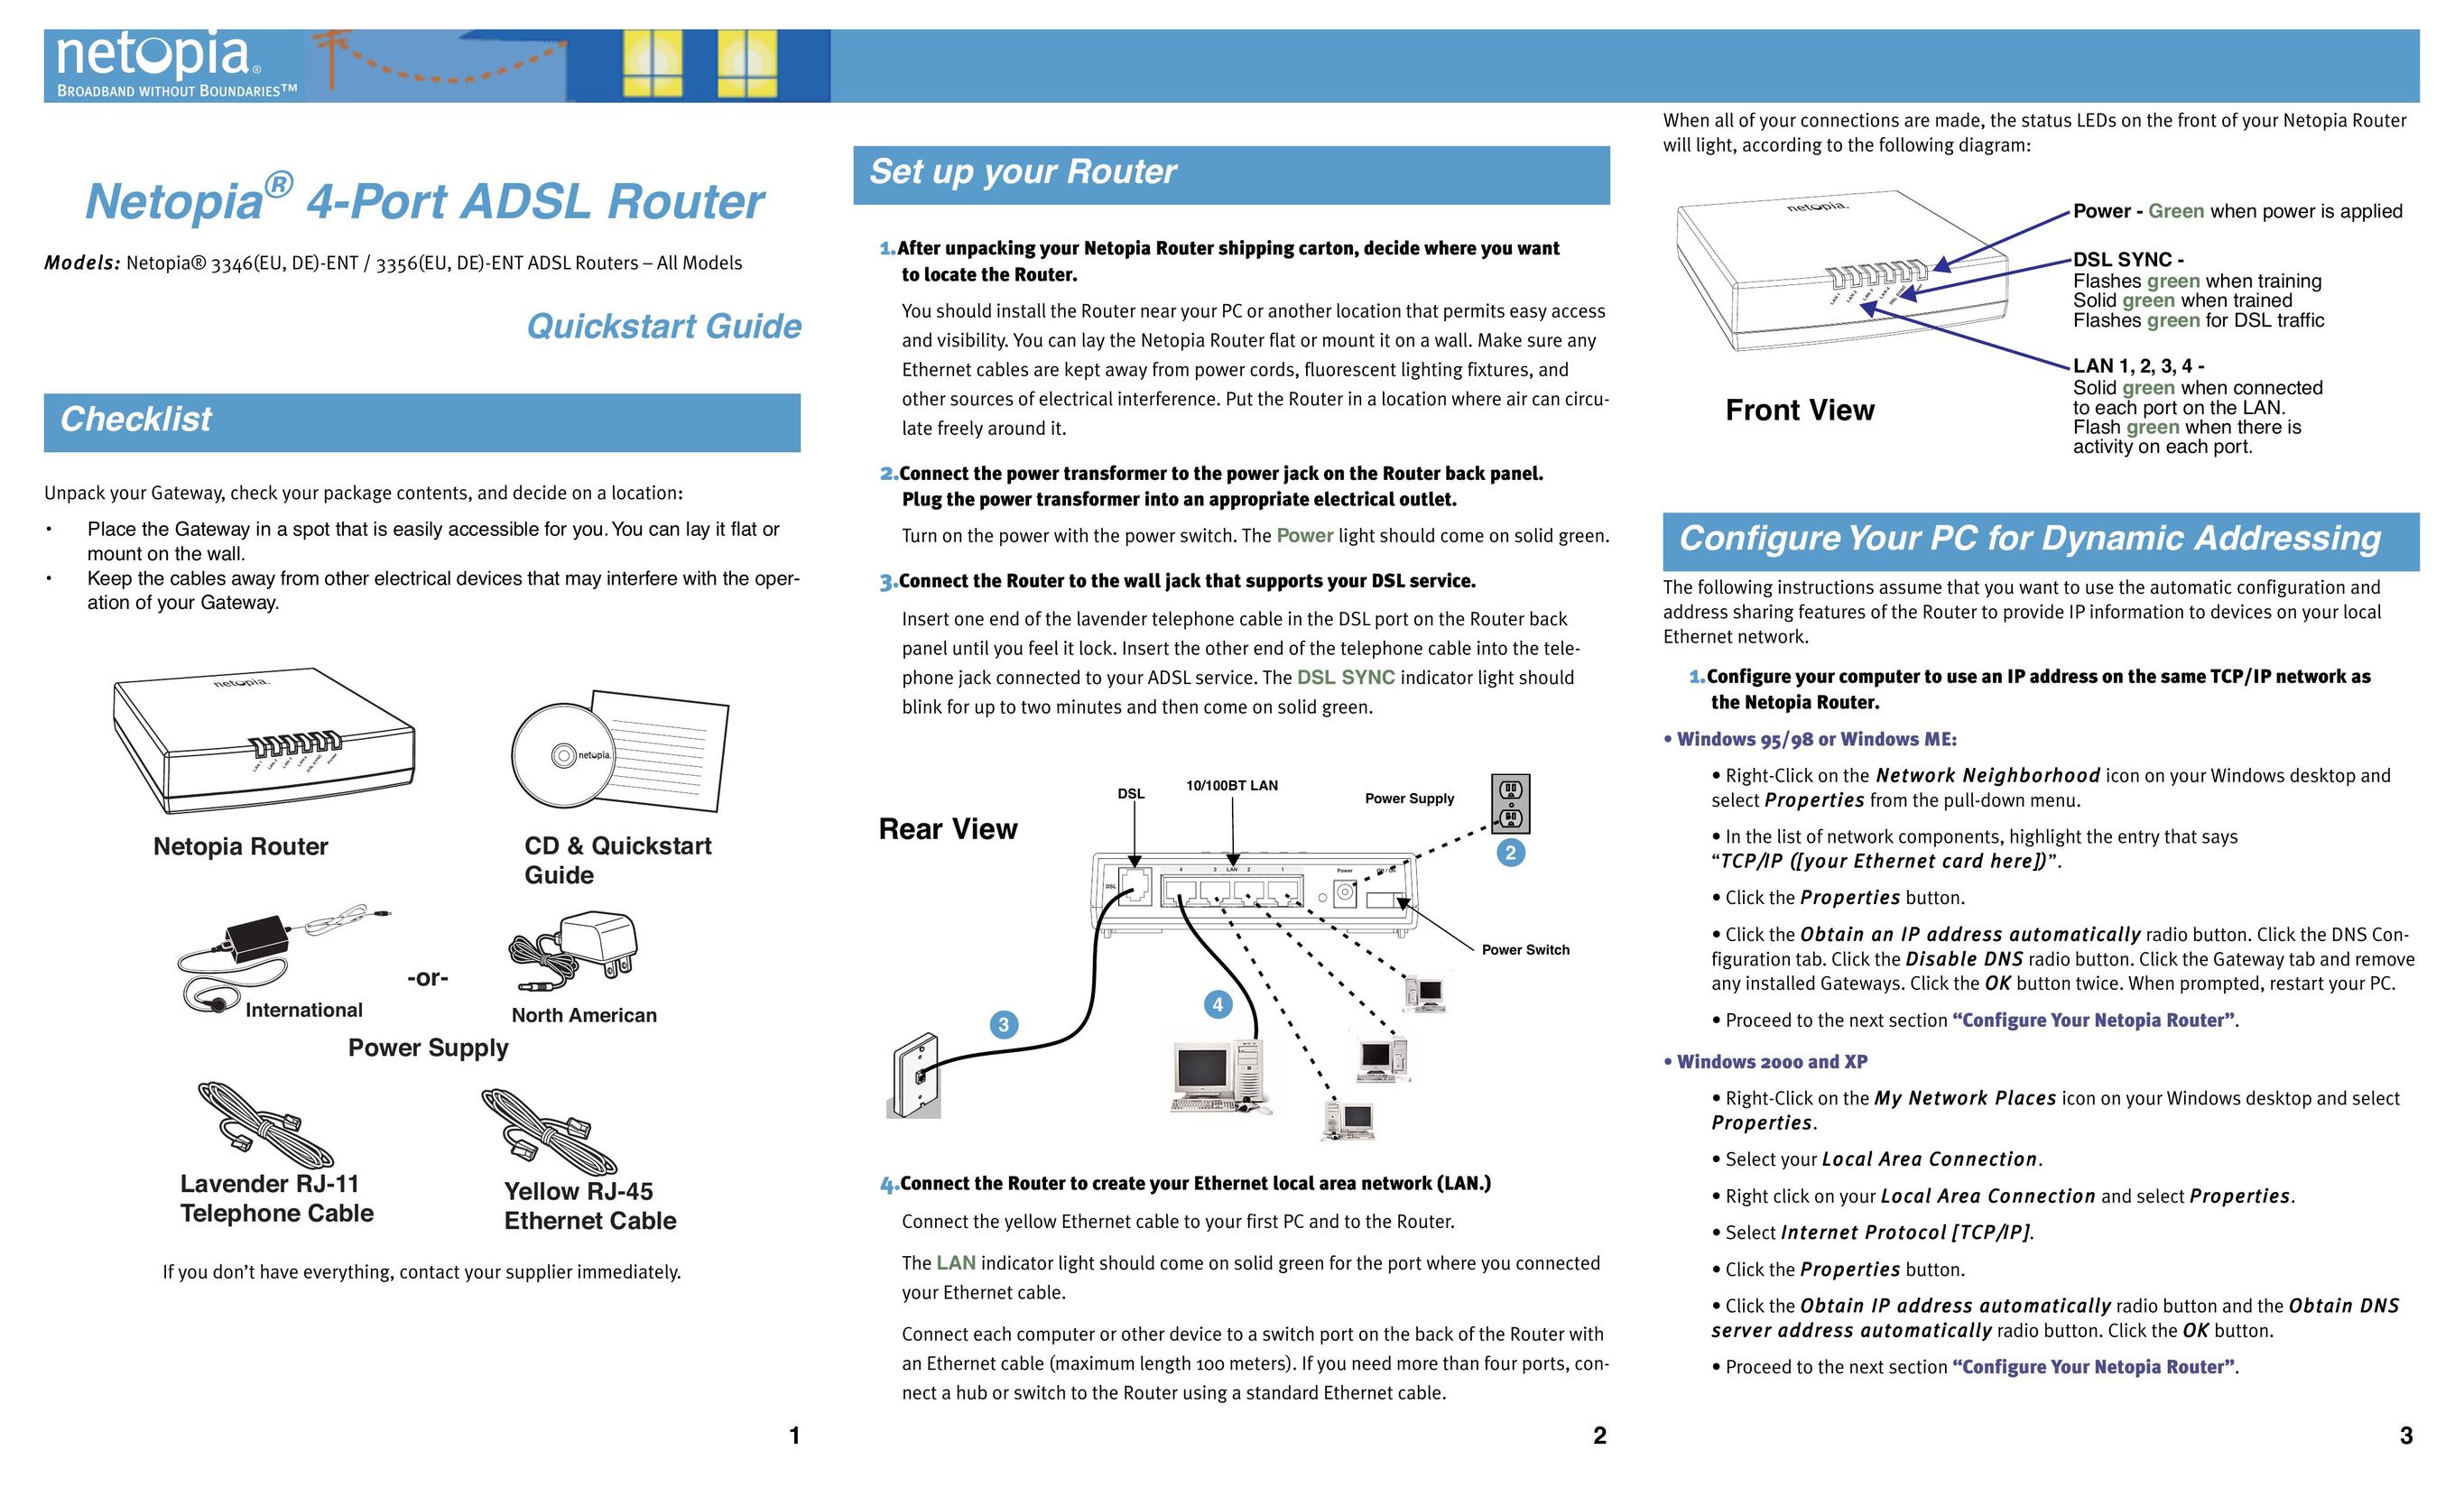 Netopia 3346(EU Network Router User Manual